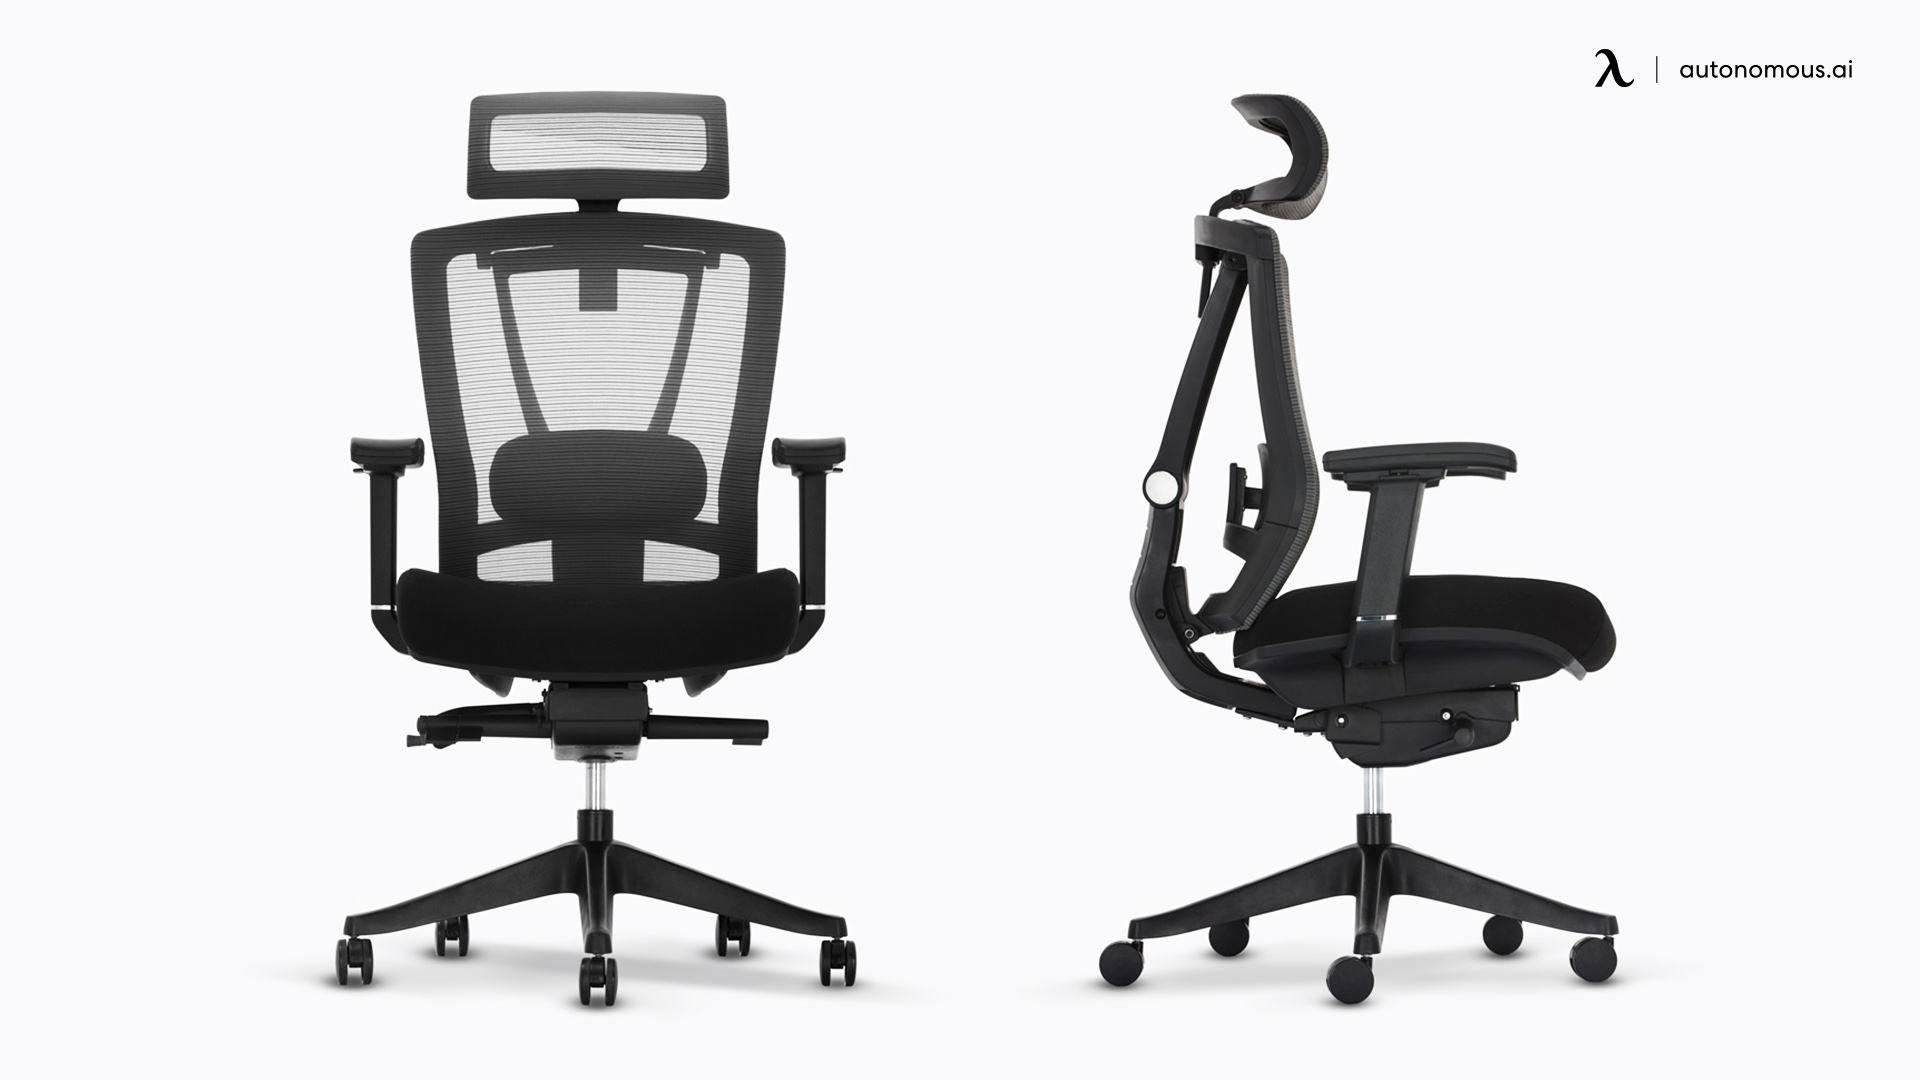 The black ergonomic chair ErgoChair 2